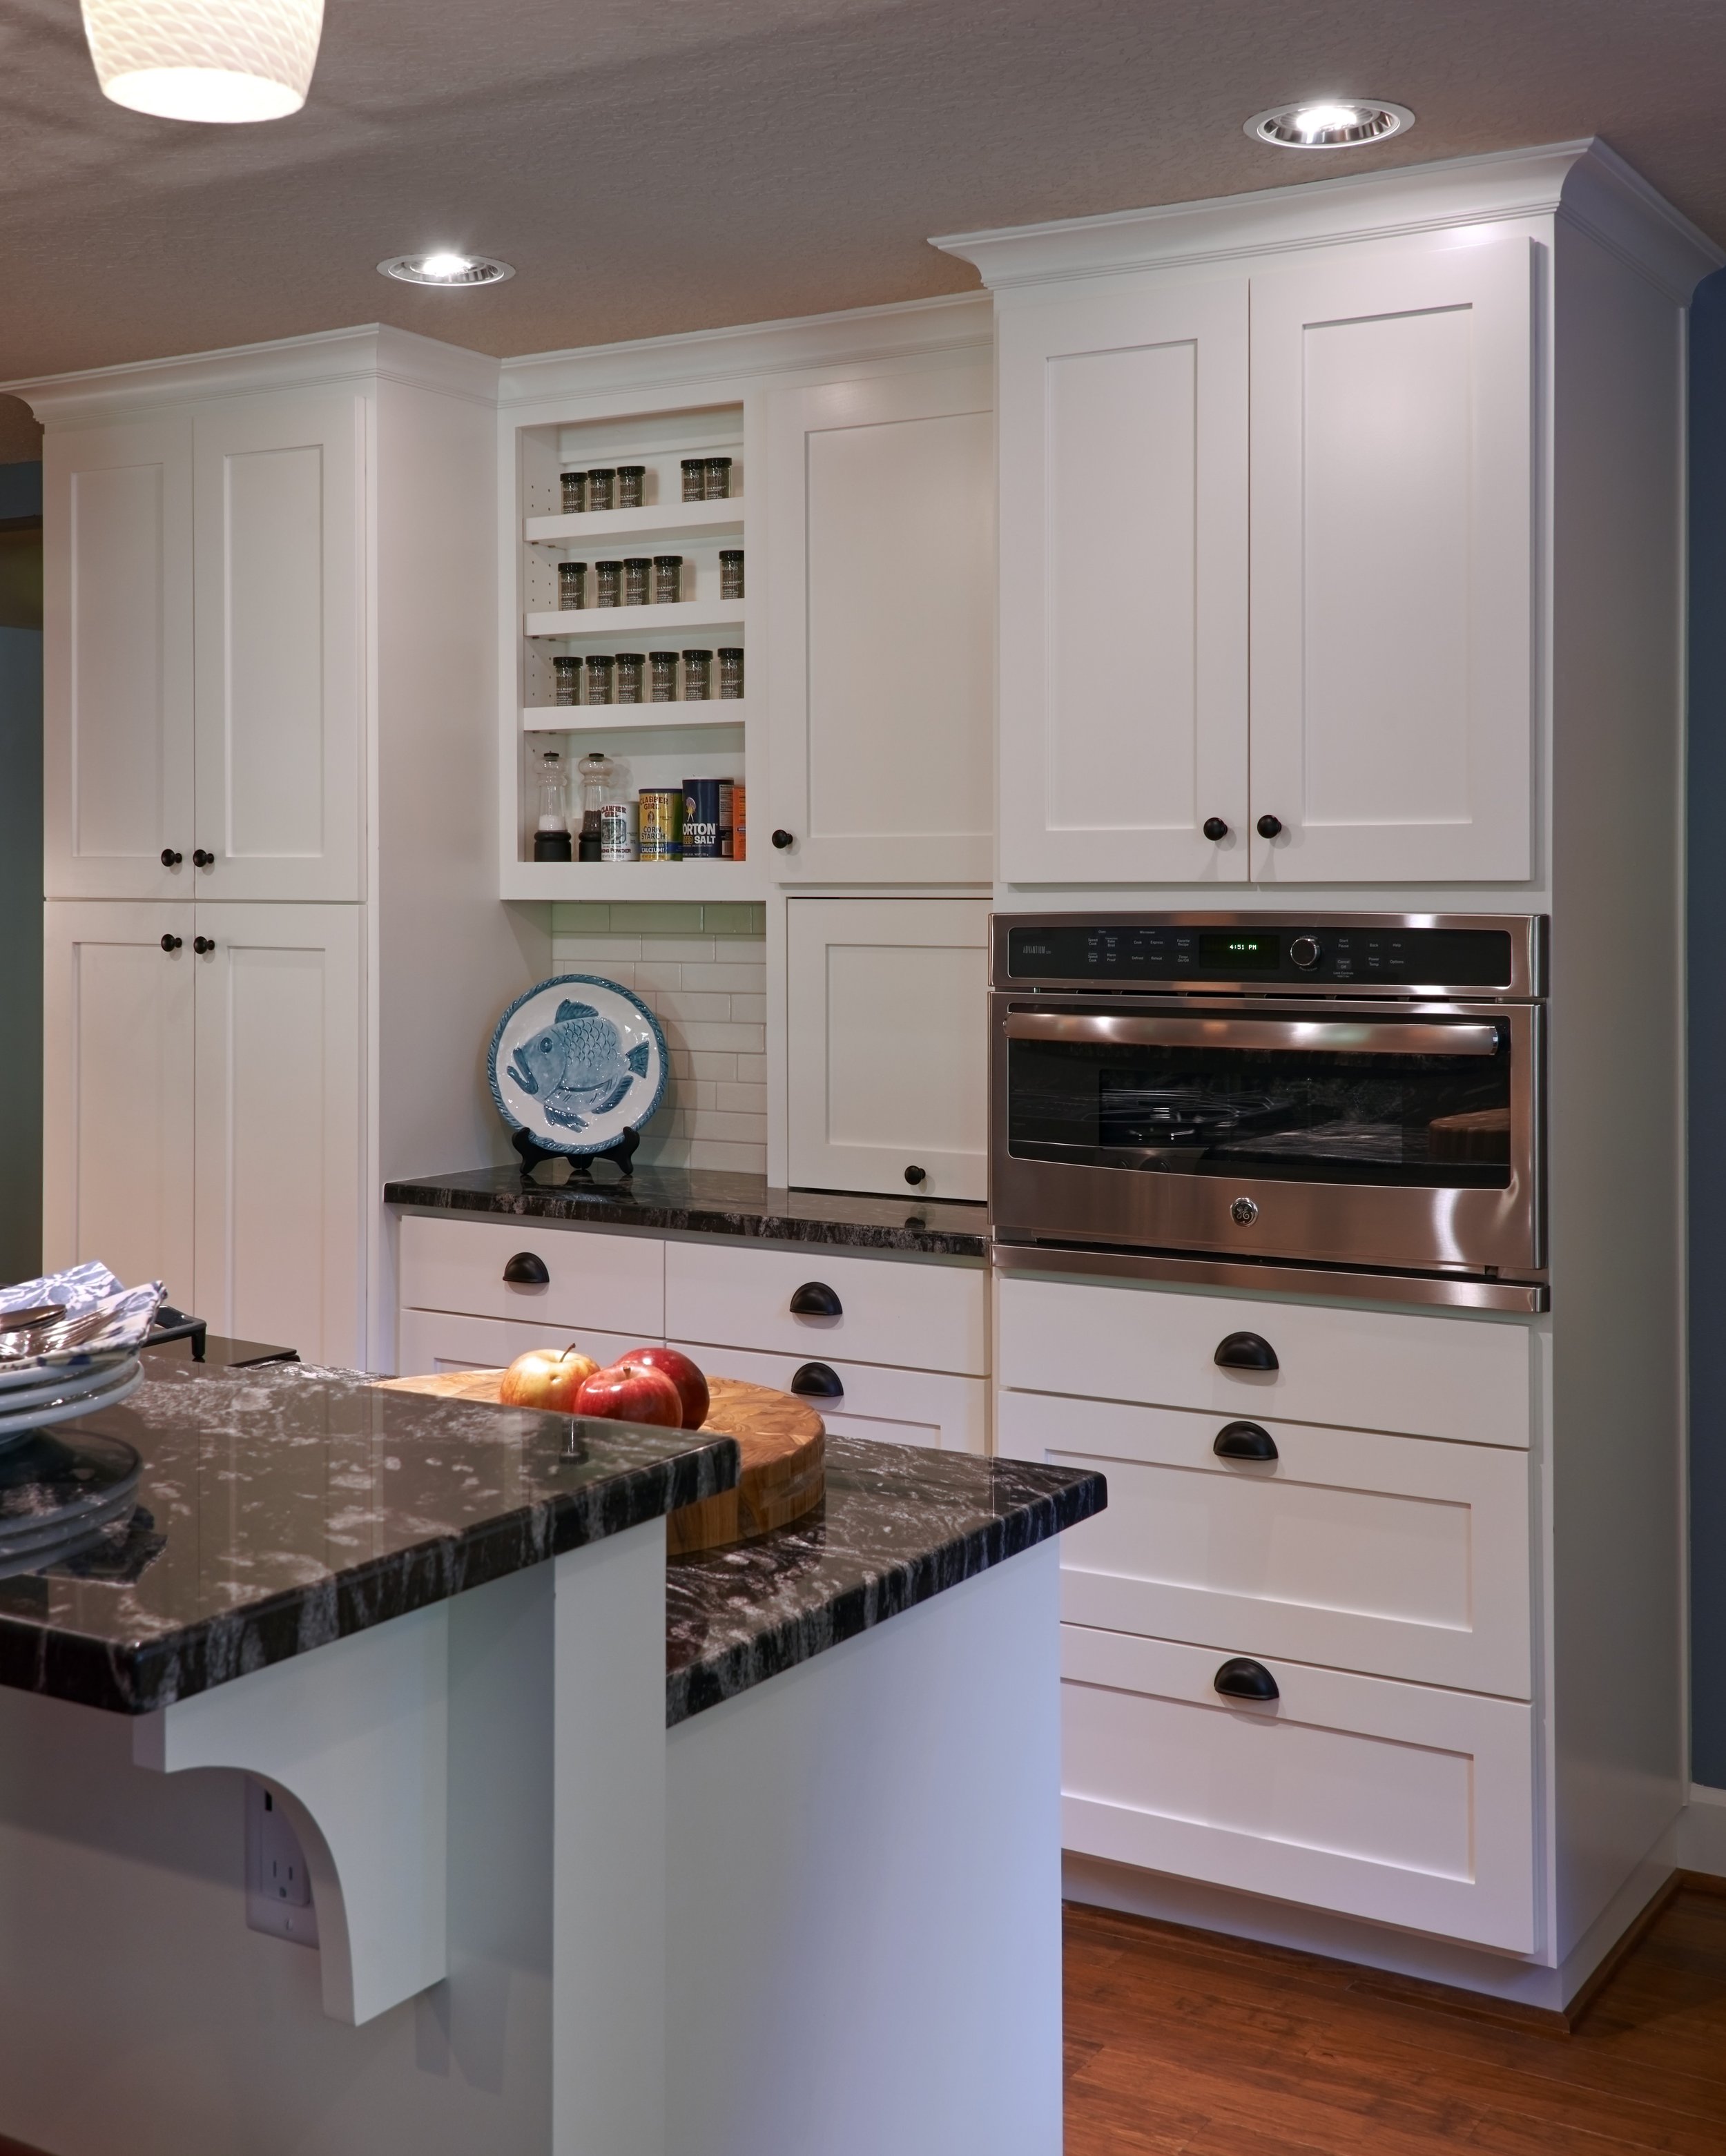 white cabinets and dark counter tops in portland oregon home kitchen design.jpg